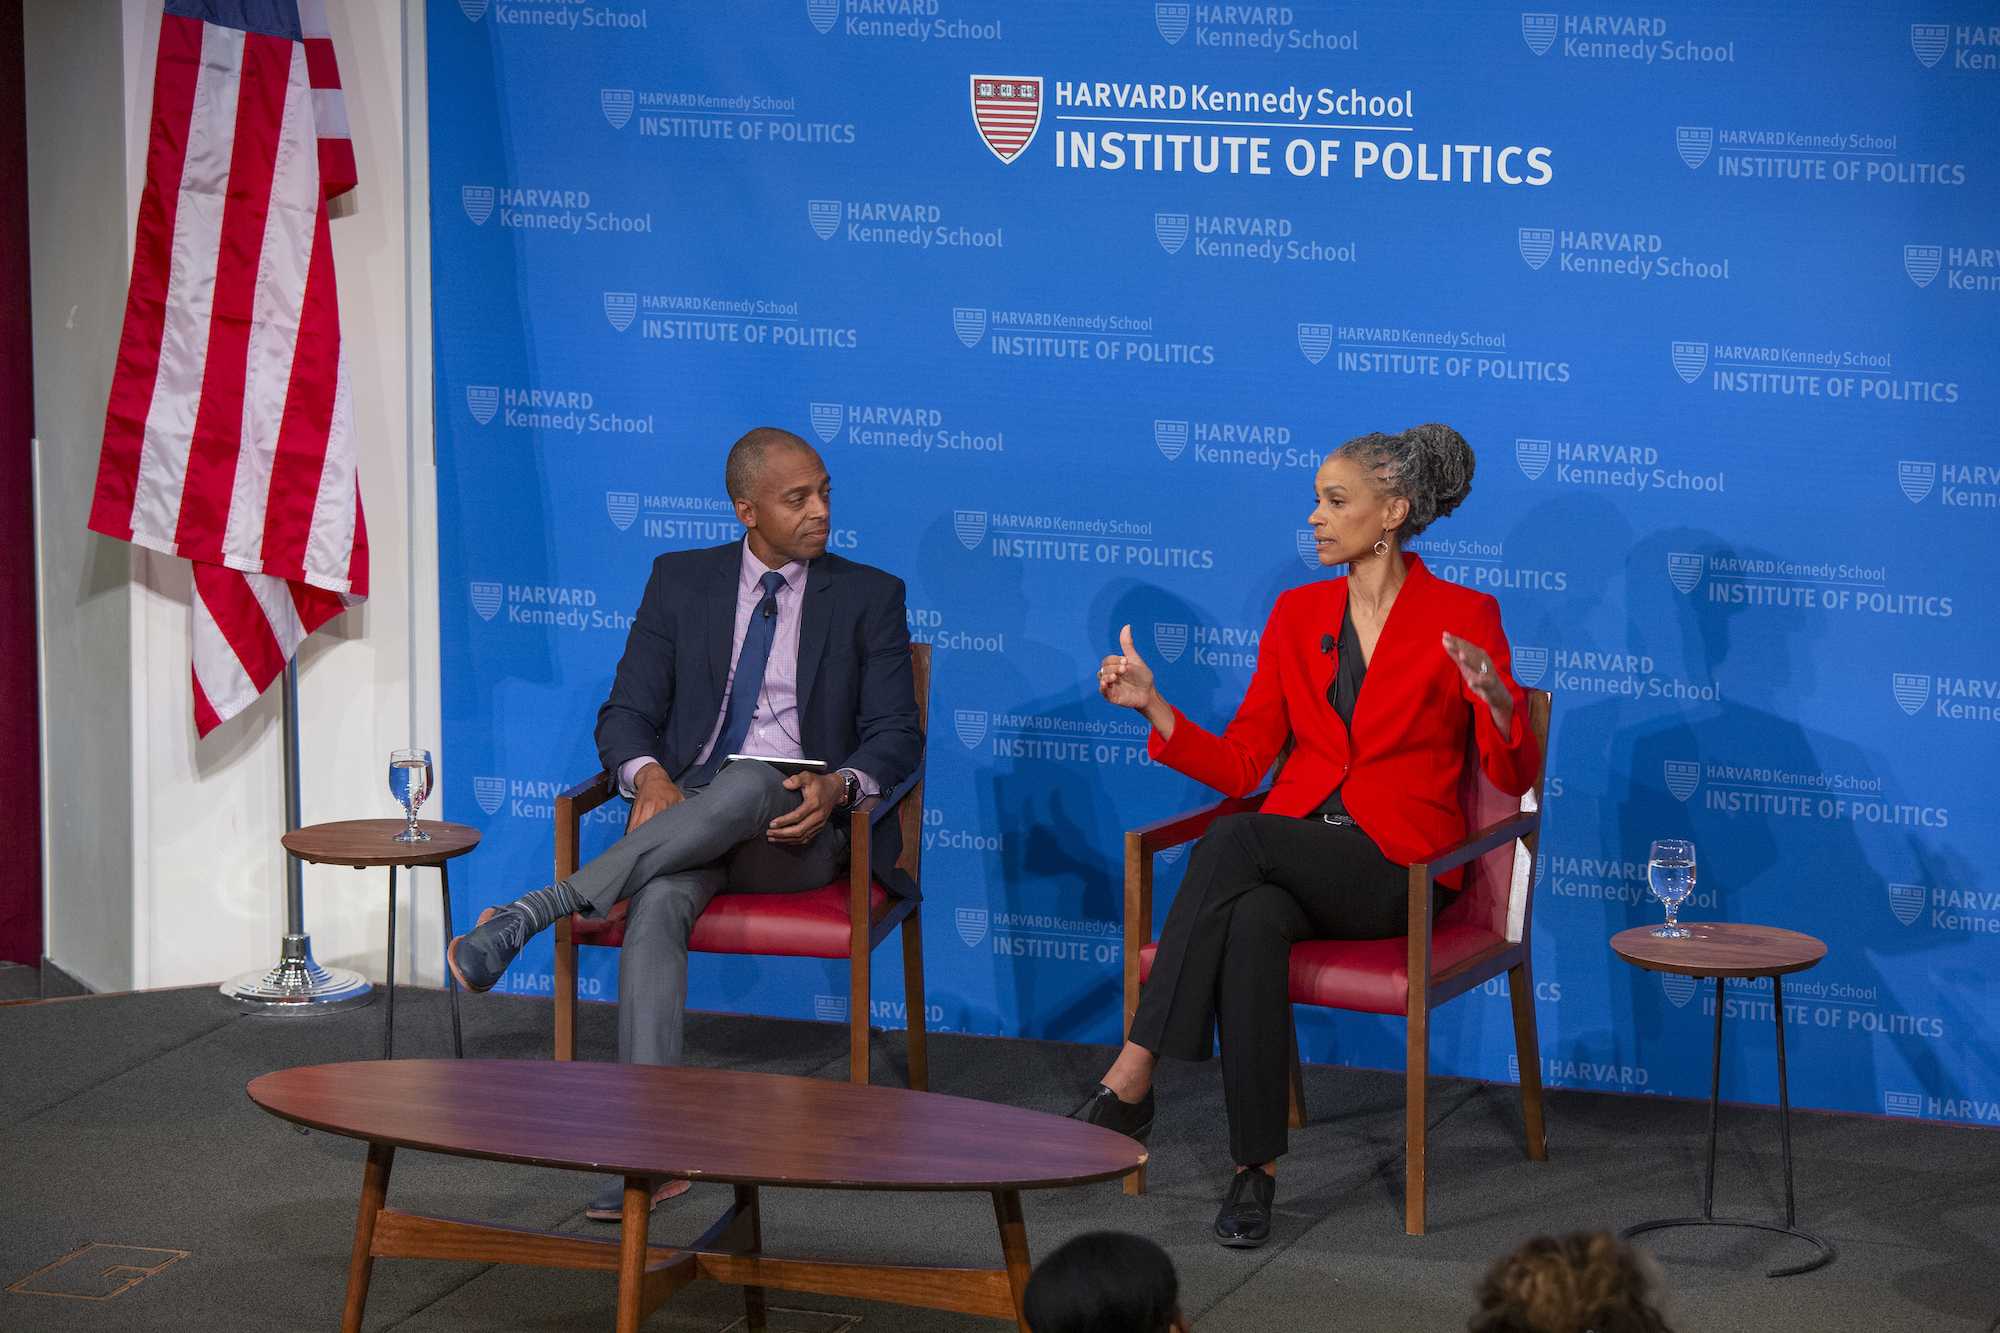 Professor Khalil Gibran Muhammad and Maya Wiley seated in JFK Forum with Maya Wiley speaking